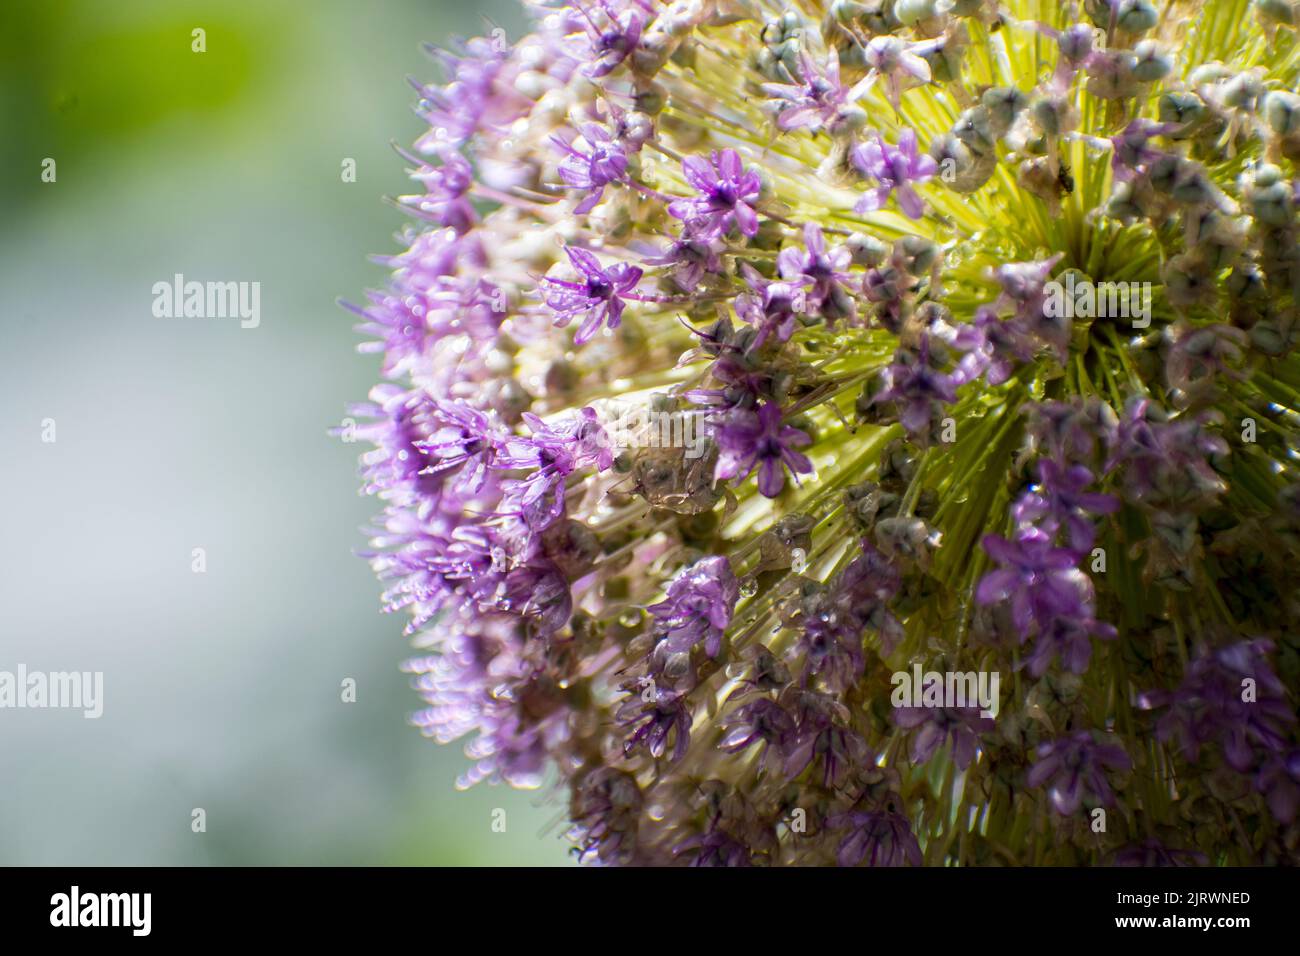 Detail of a large purple allium flower head Stock Photo